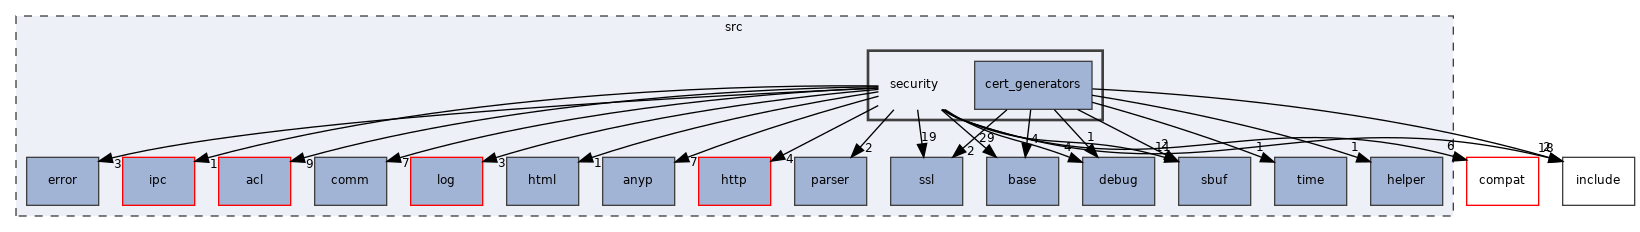 src/security